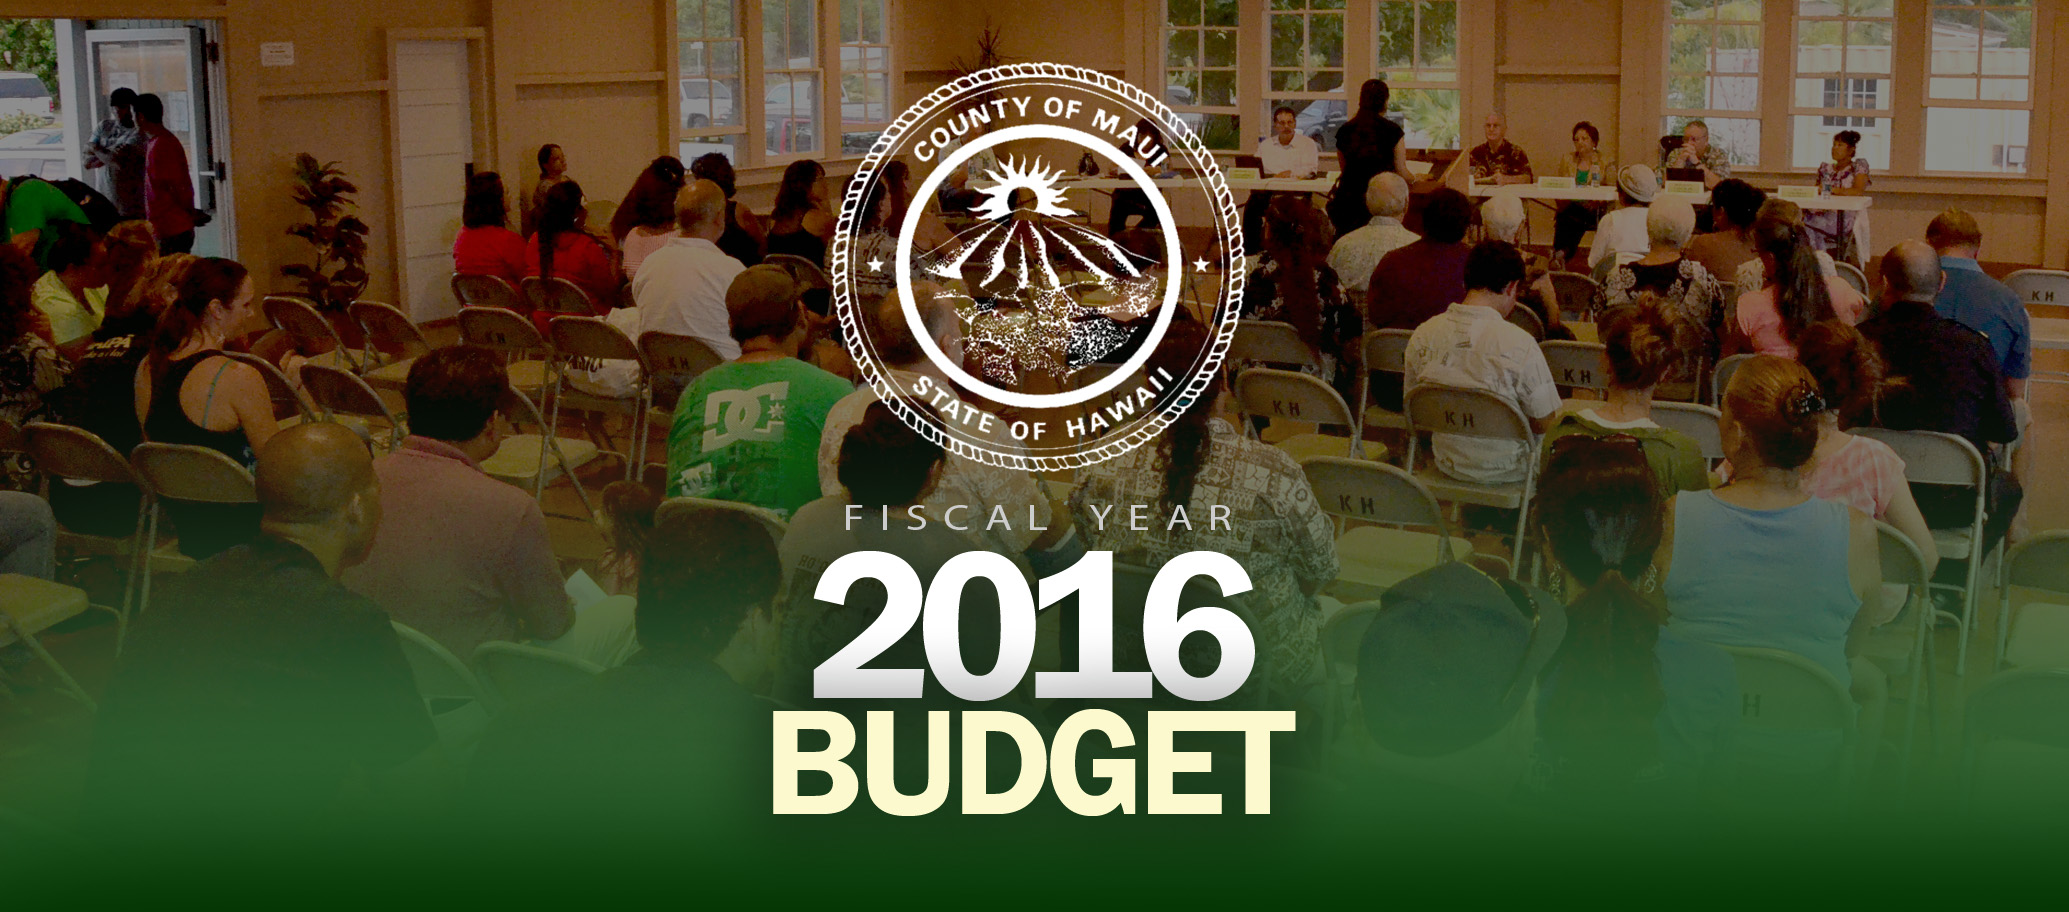 2016 budget